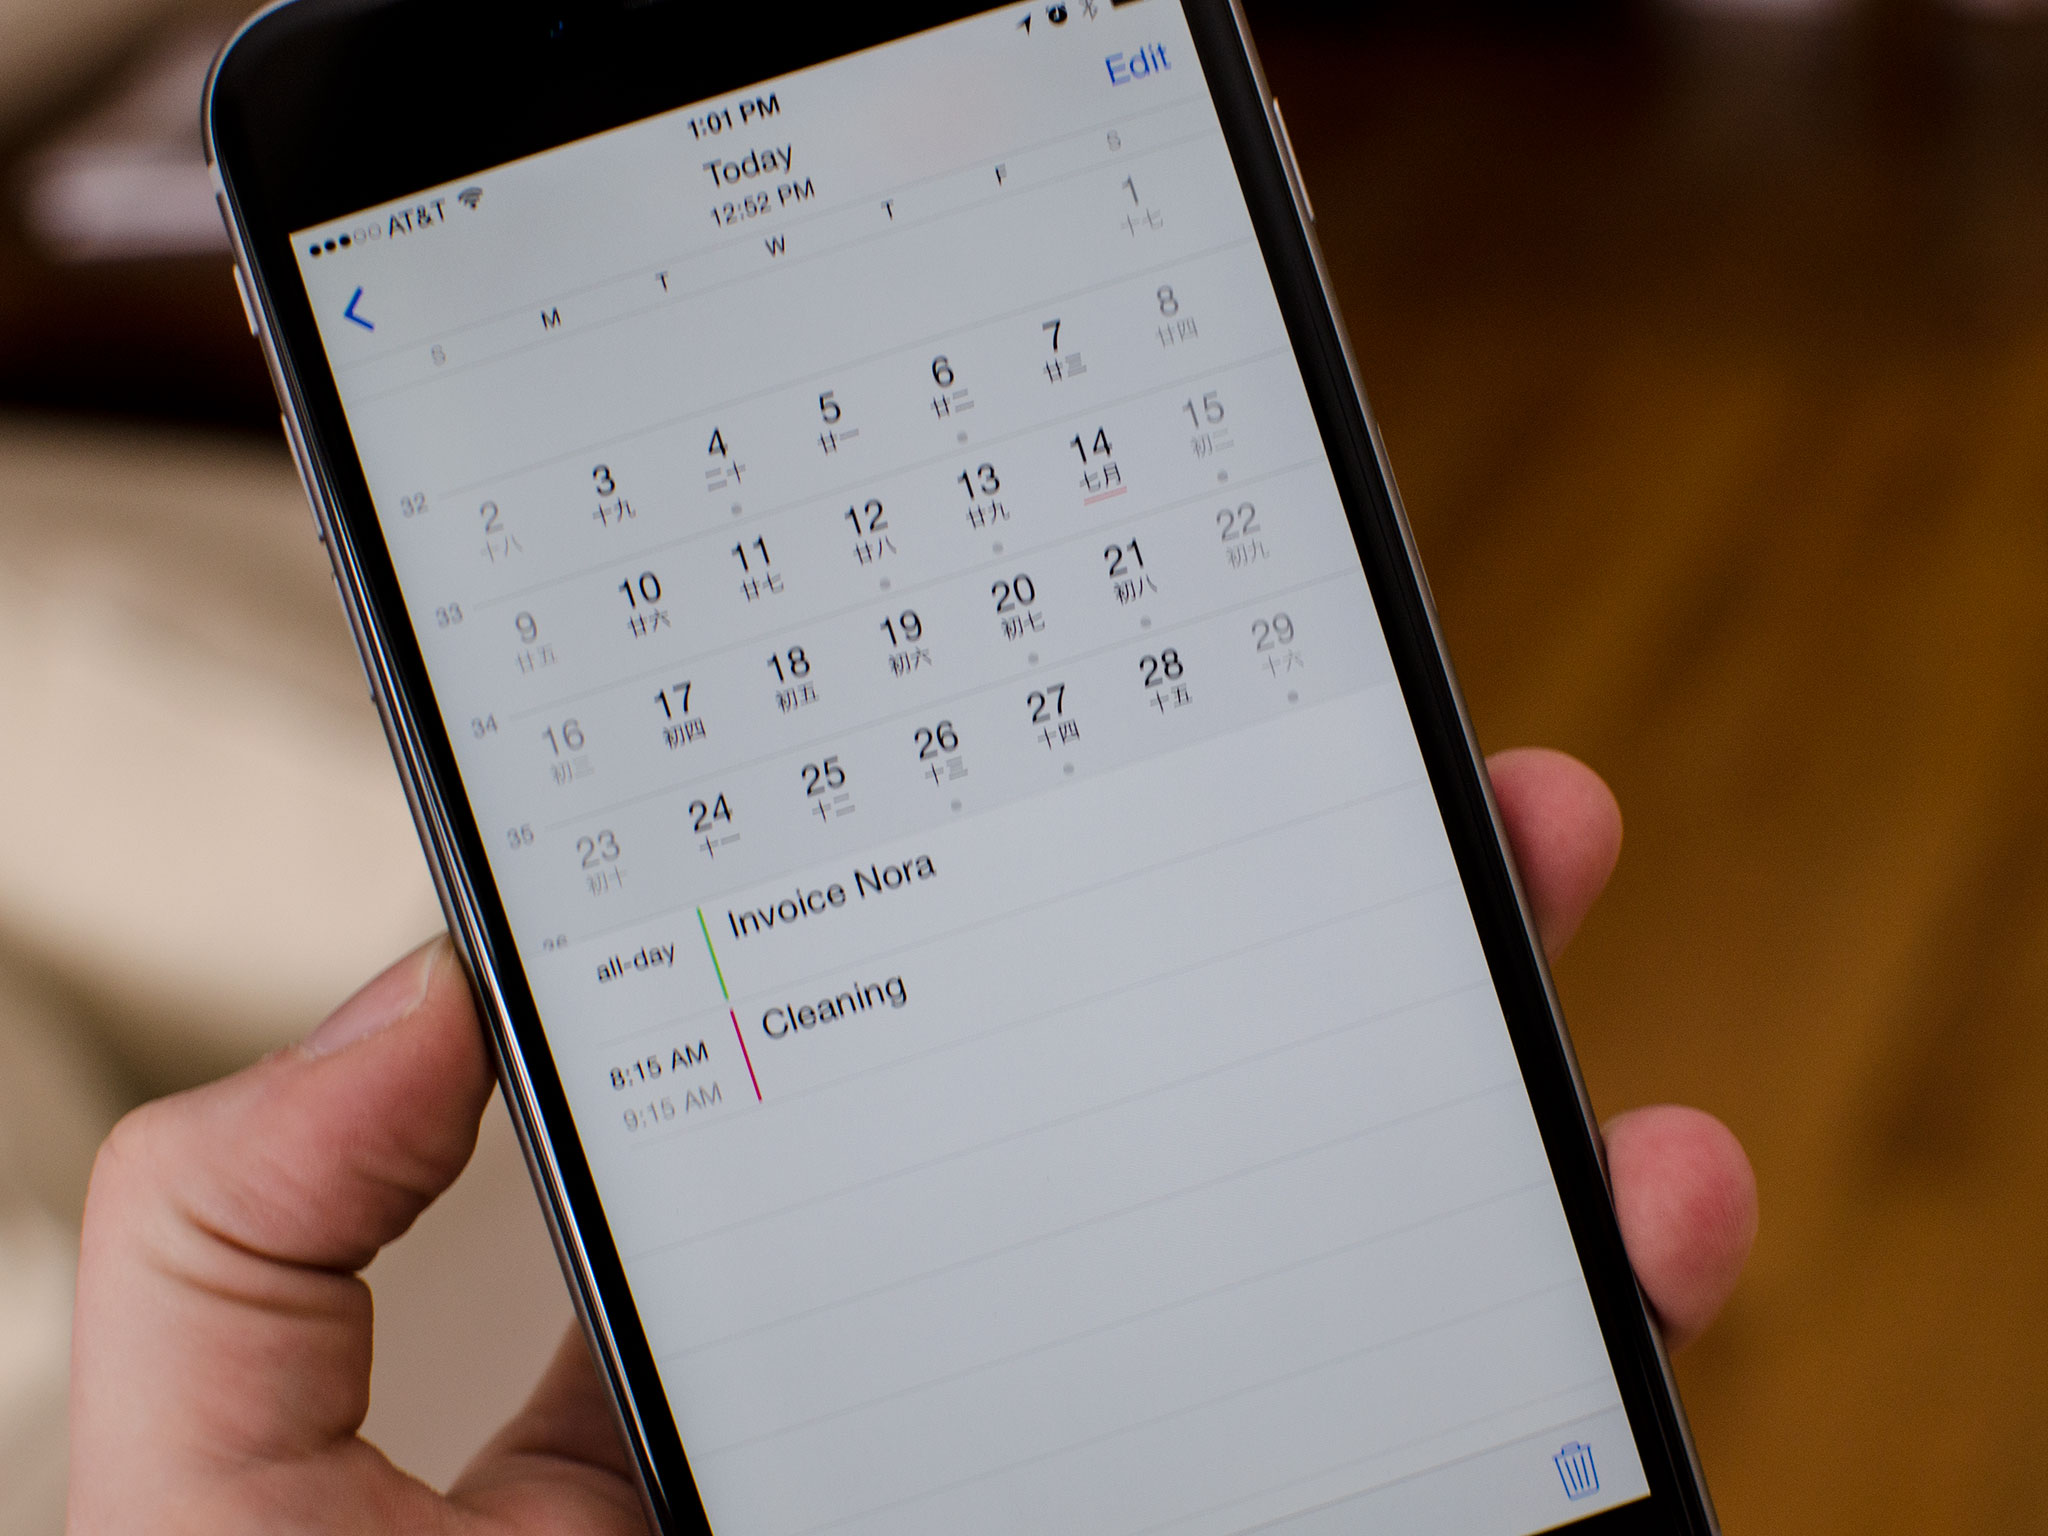 Alternate calendars displayed on an iPhone